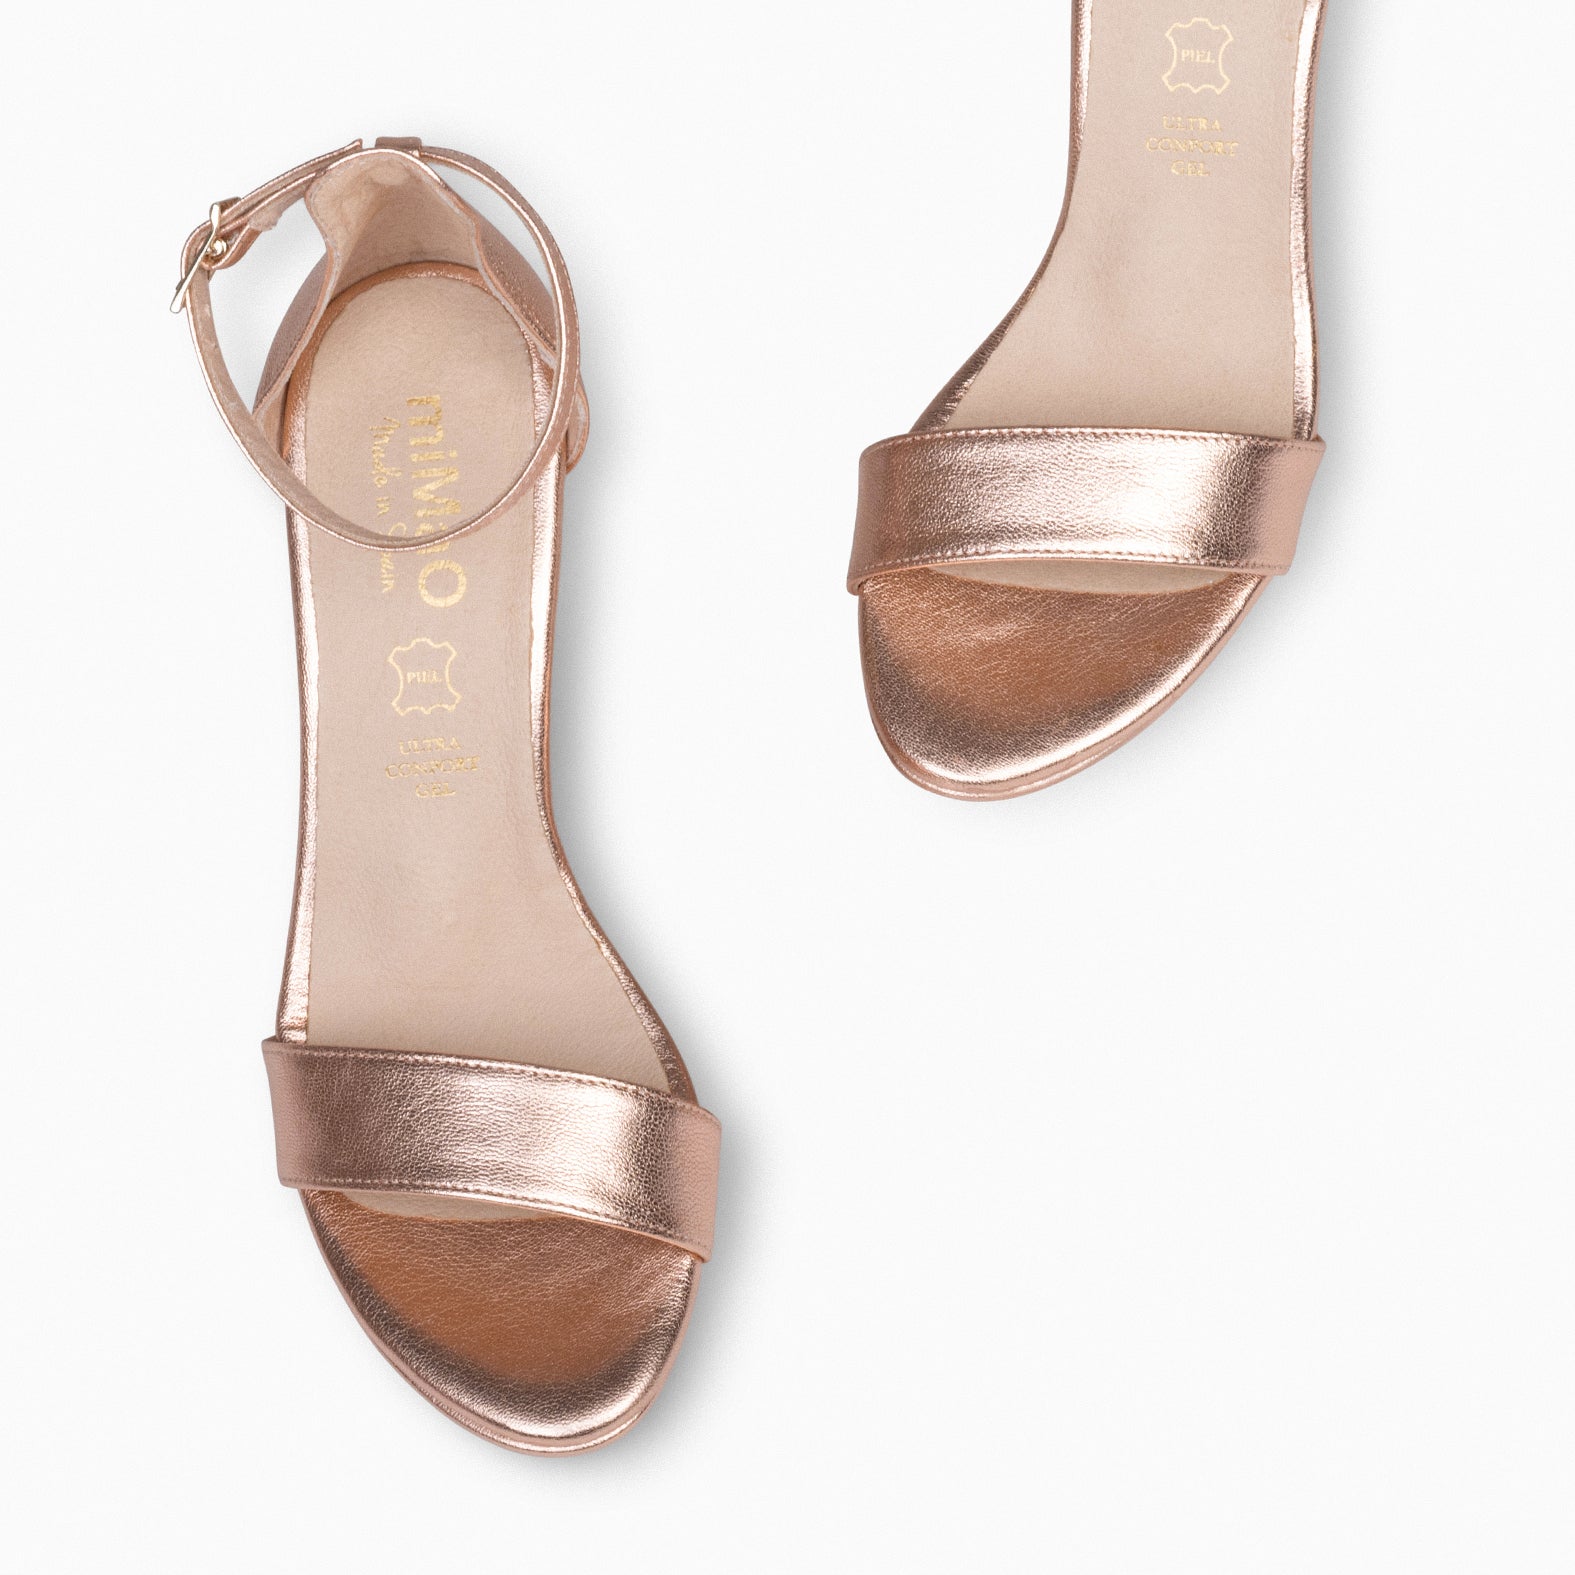 PARTY – GOLDEN PINK high-heeled platform sandals